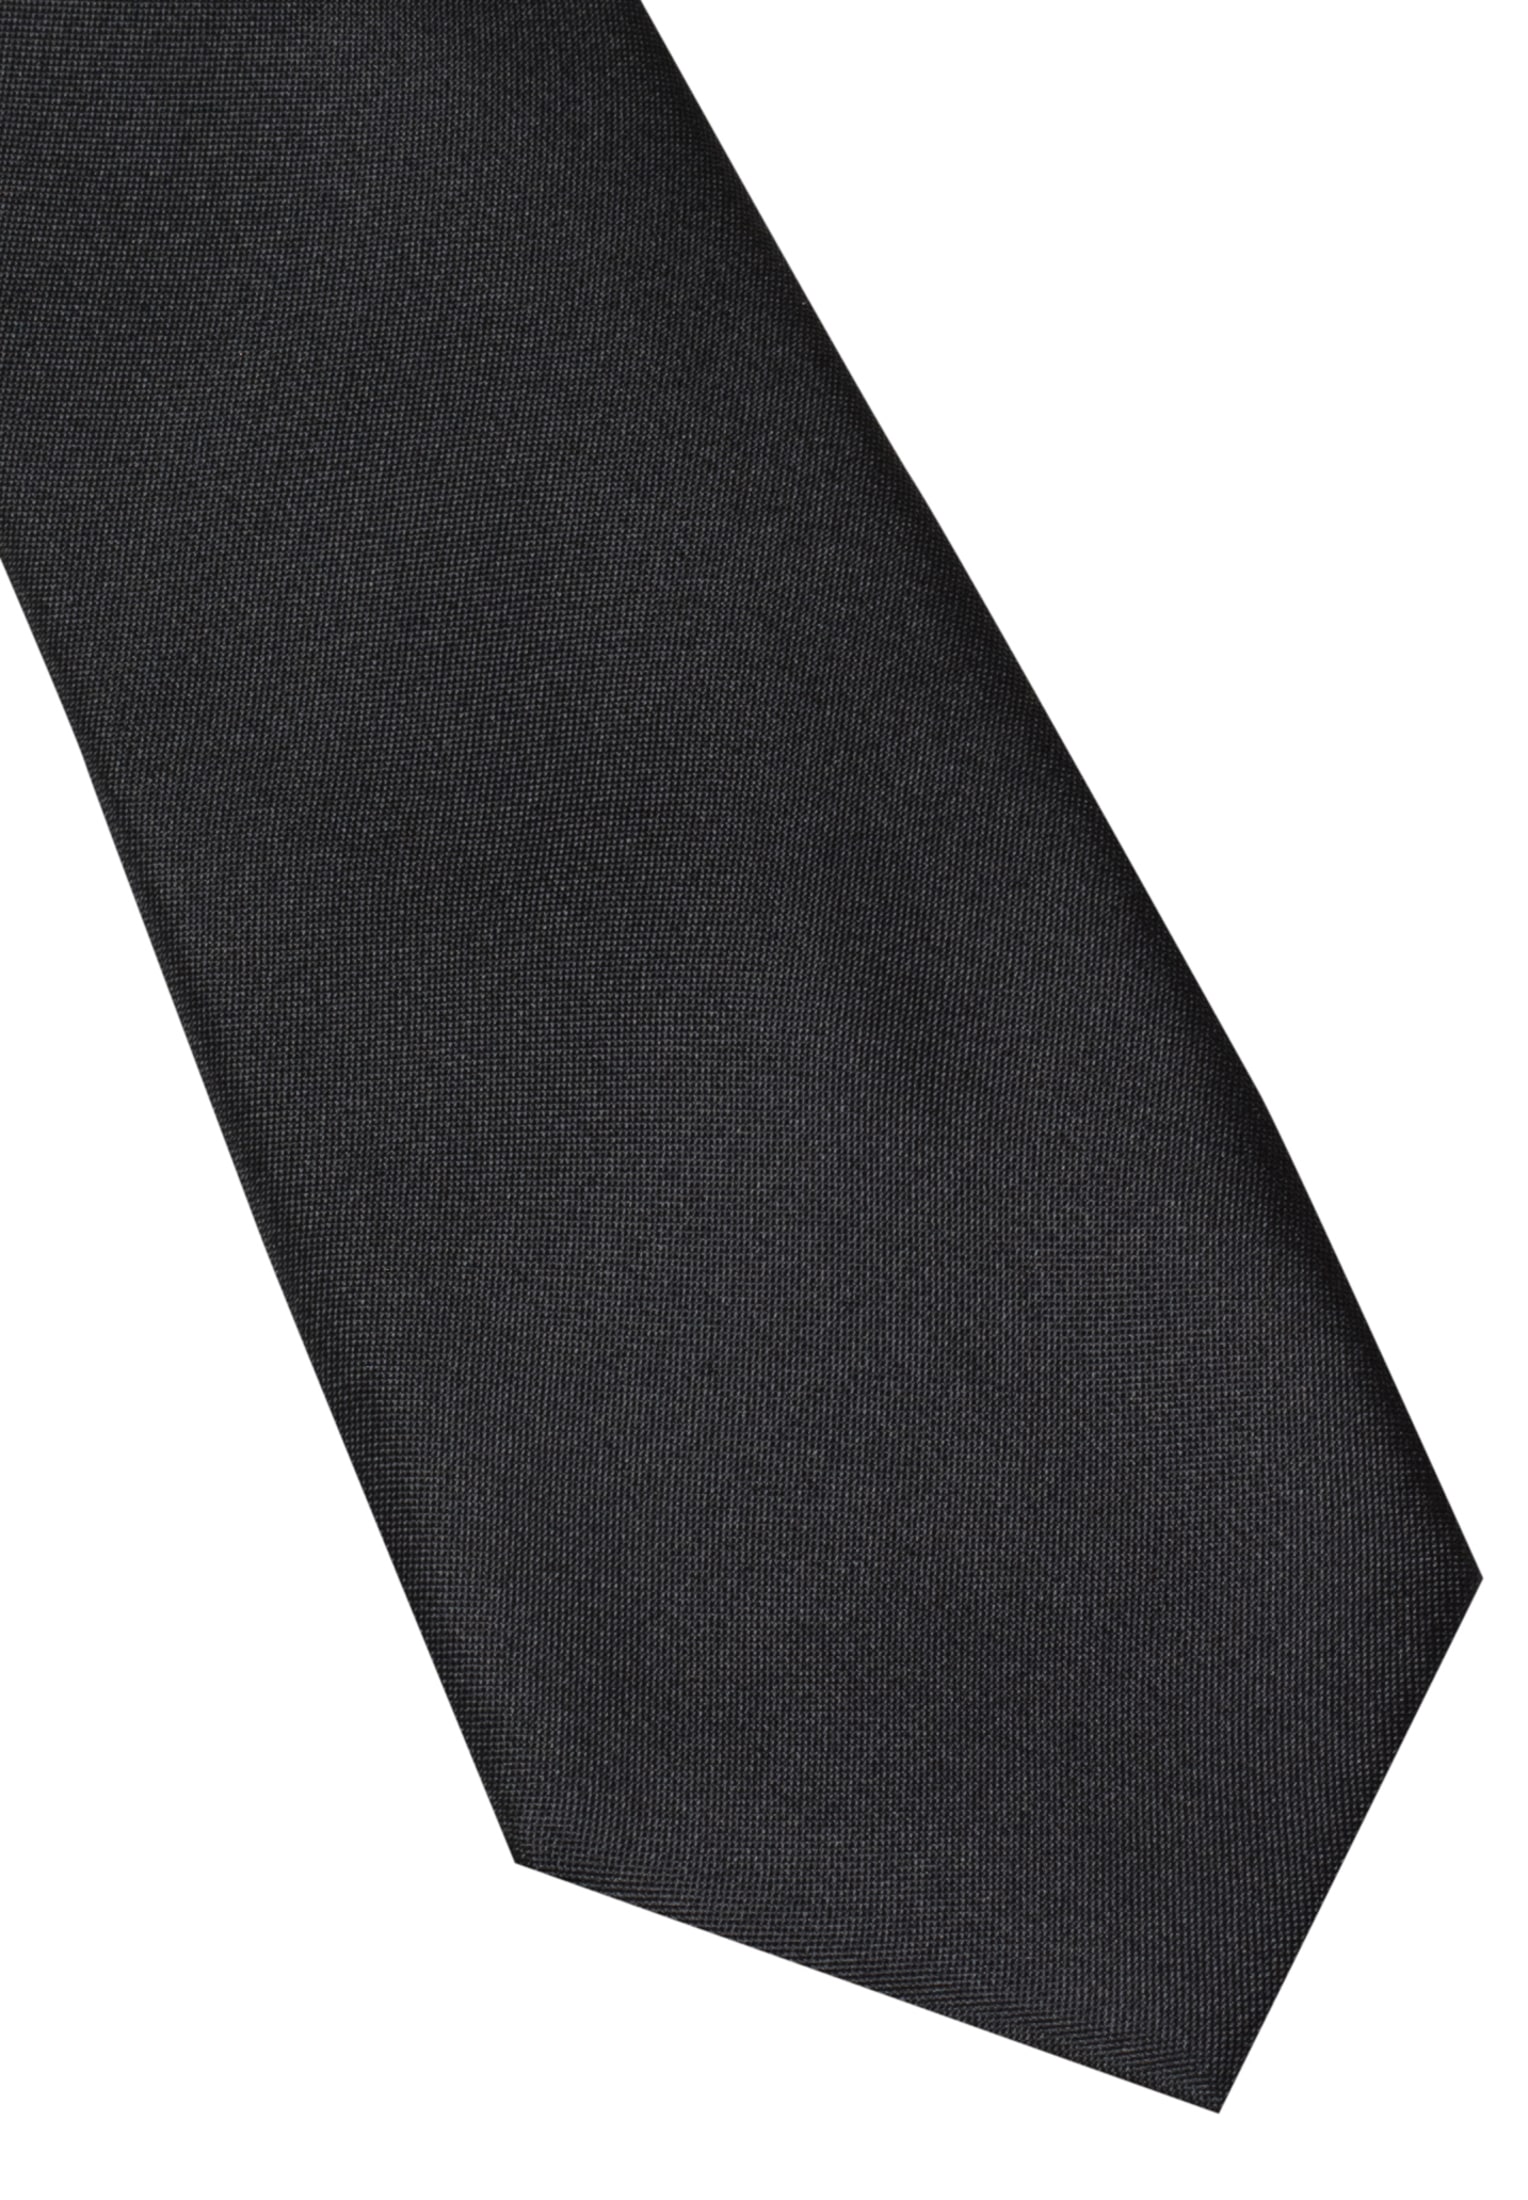 Krawatte in silber unifarben | silber | 142 | 1AC00025-03-11-142